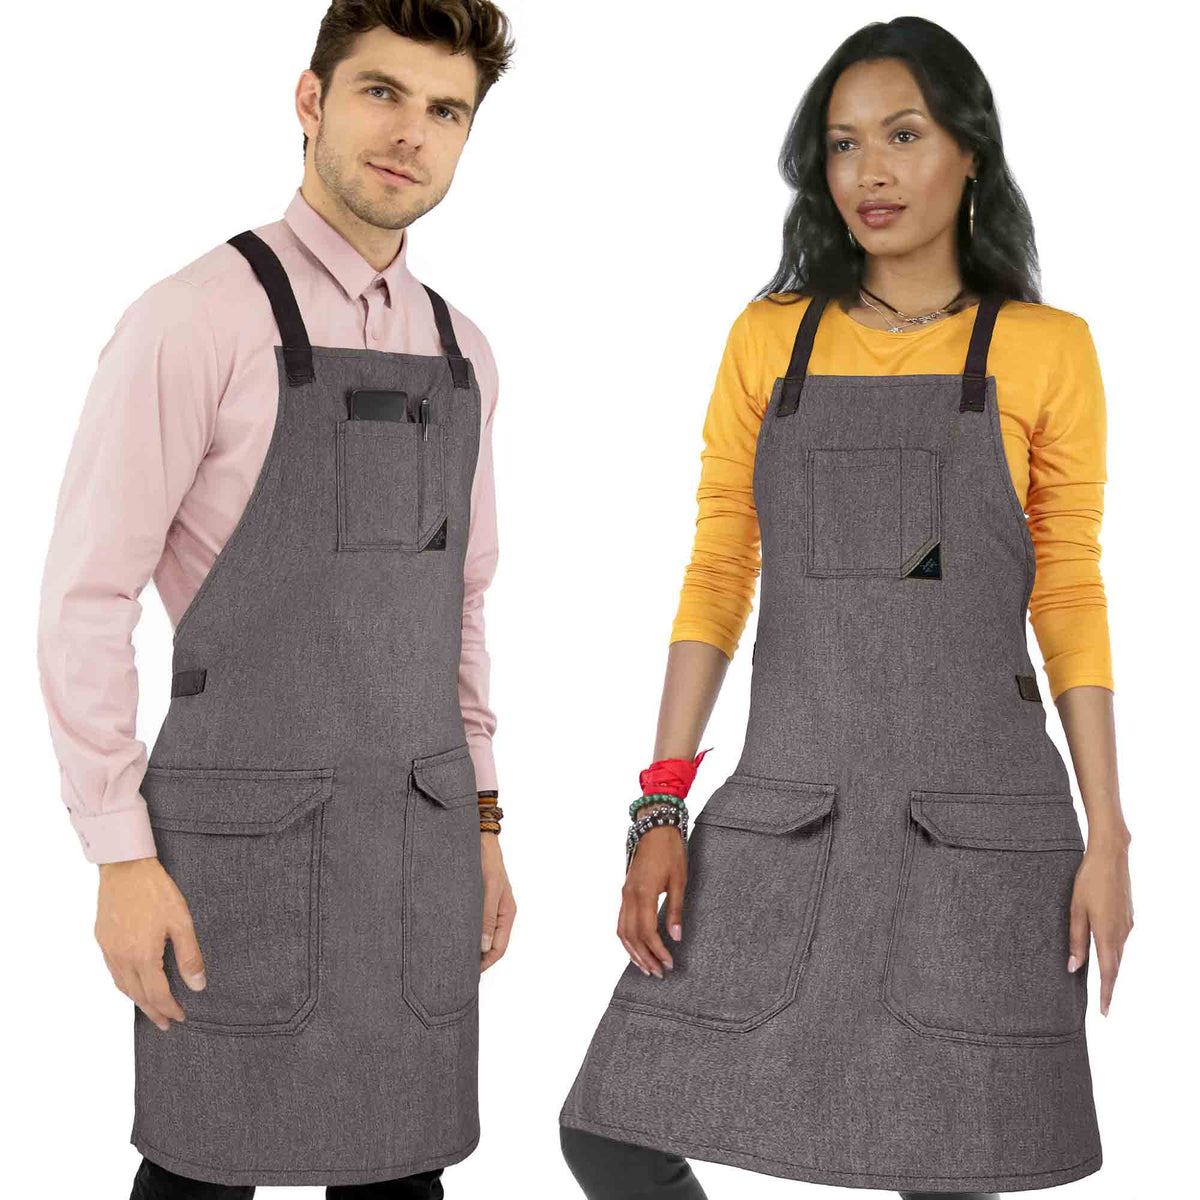 Work Apron - Adjustable for Men, Women - Cook, Chef, Server, Baker, Barista Shop, Restaurant, Coffee - Under NY Sky